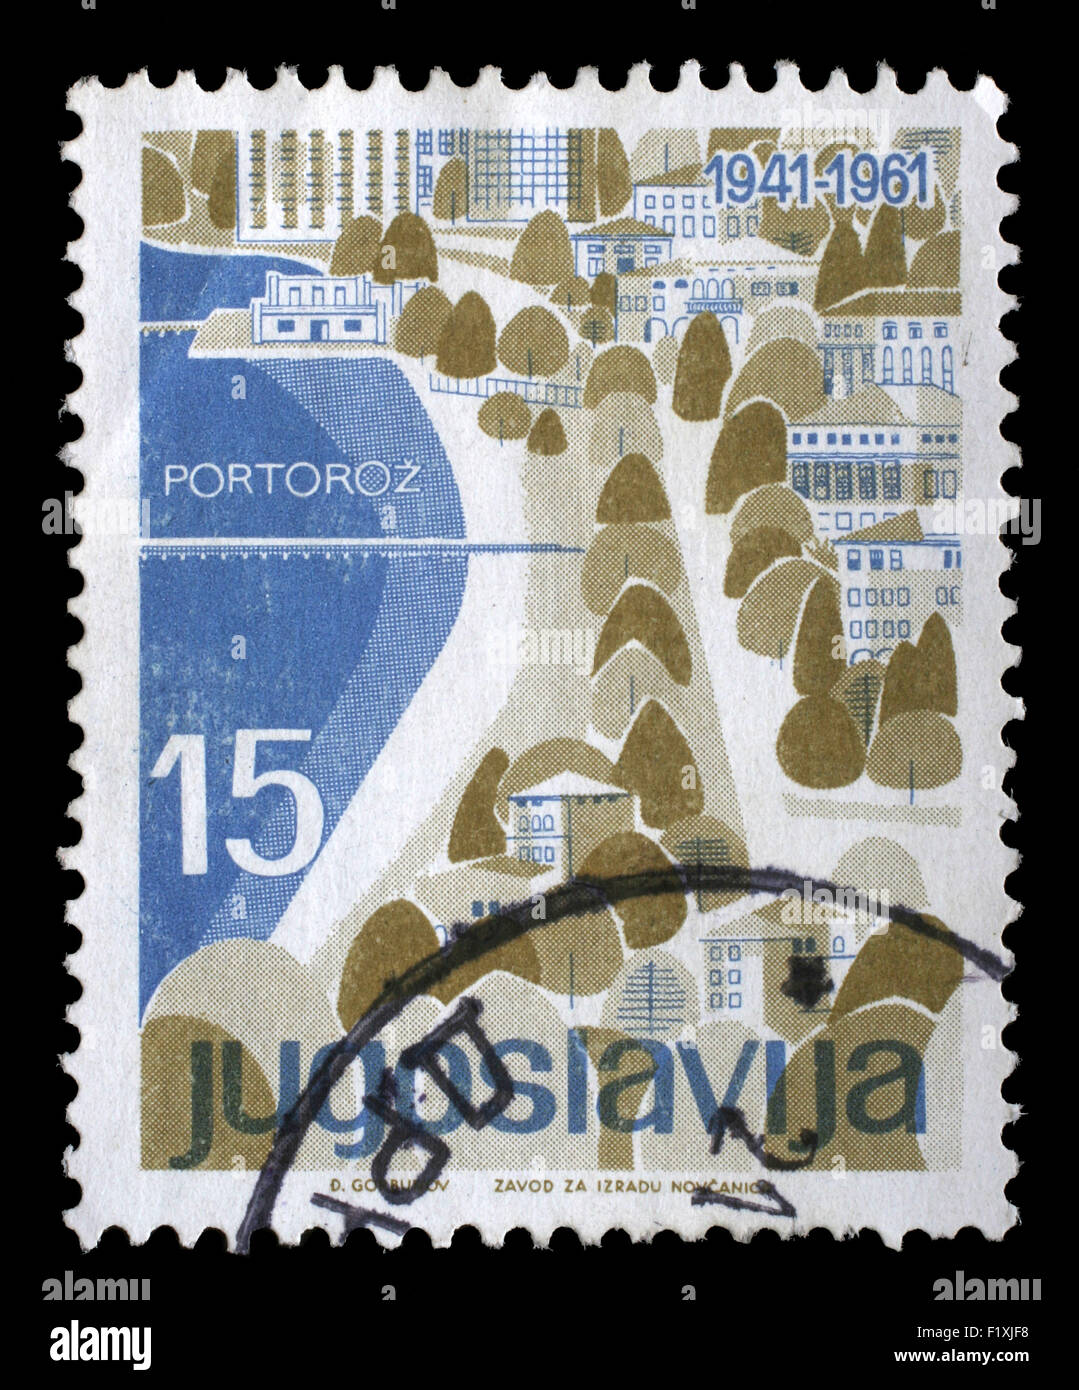 Stamp printed in Yugoslavia from the Local Tourism issue shows Portoroz, Slovenia, circa 1961. Stock Photo